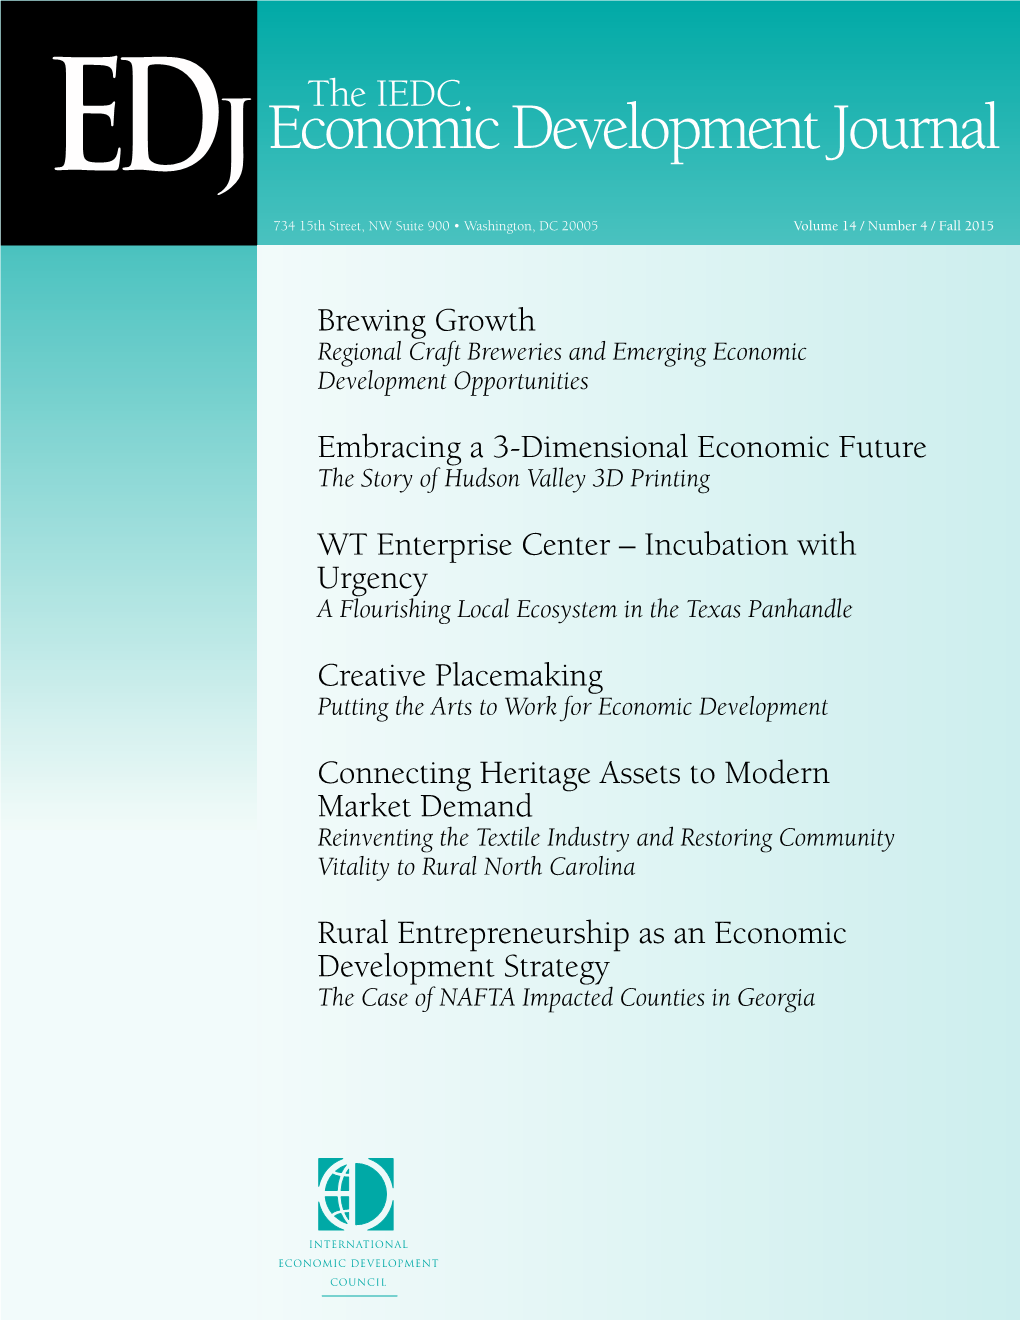 Edjeconomic Development Journal